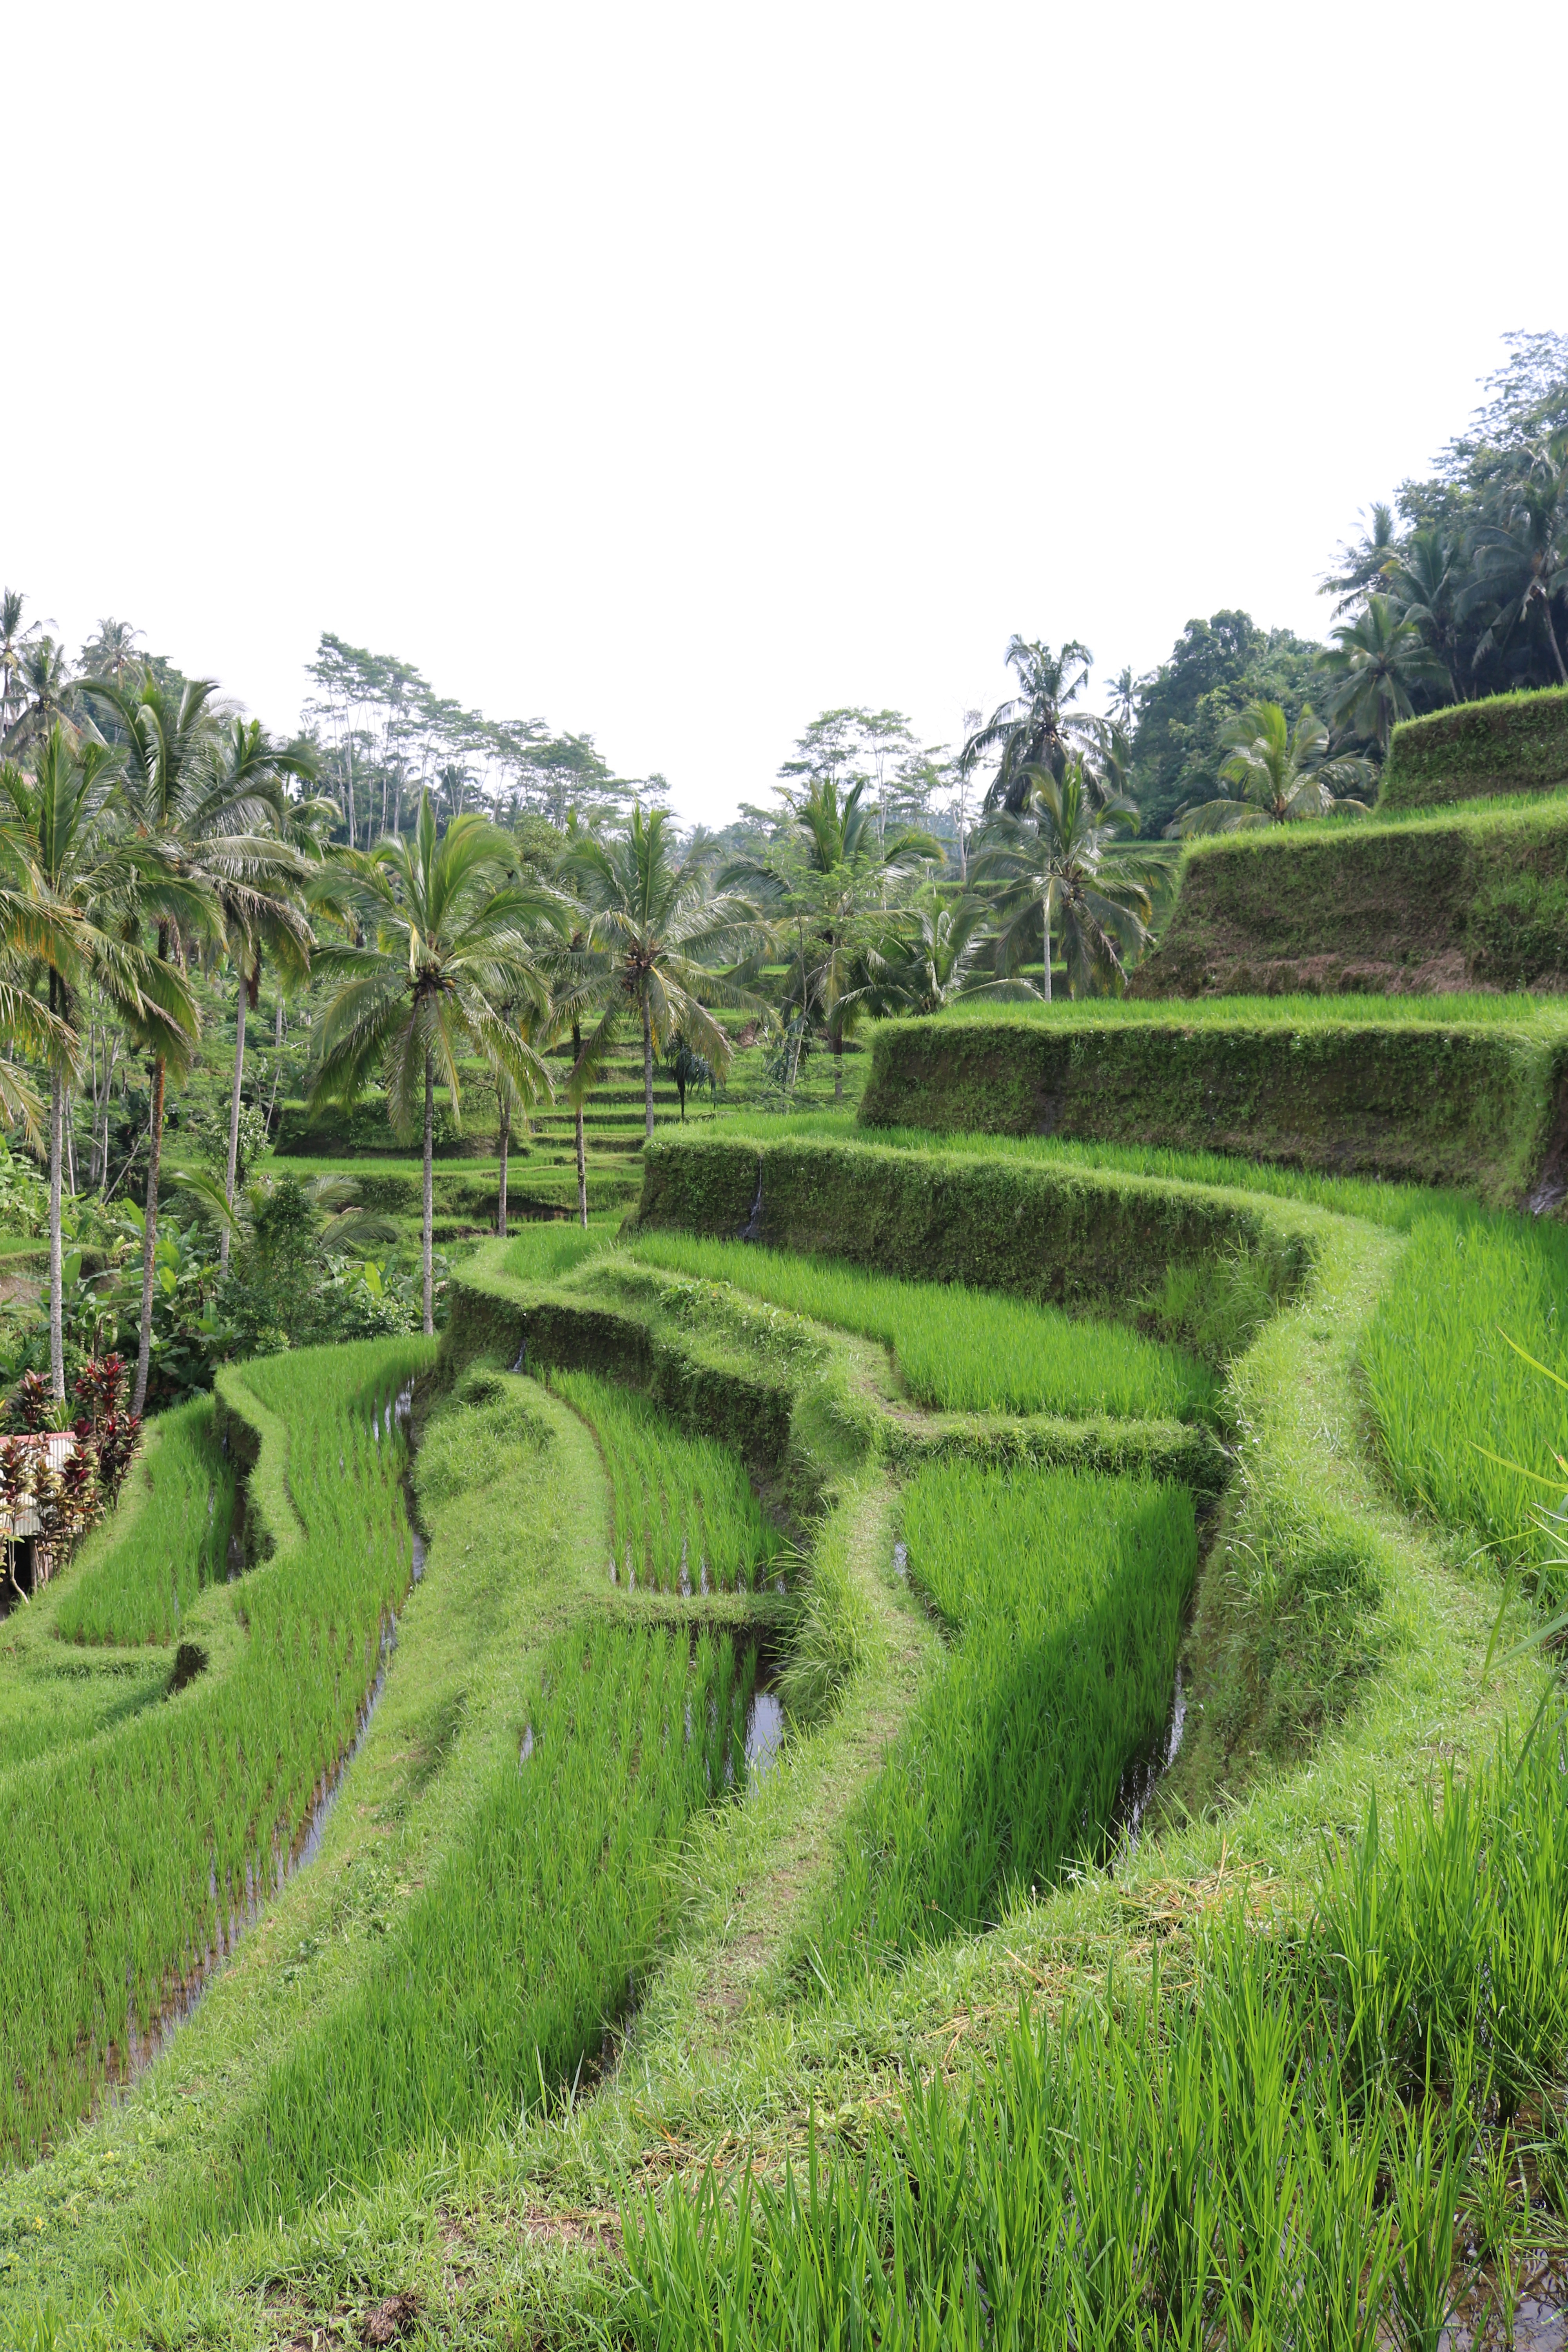 Tegallaleng Rice Terraces in Ubud, Bali, Indonesia